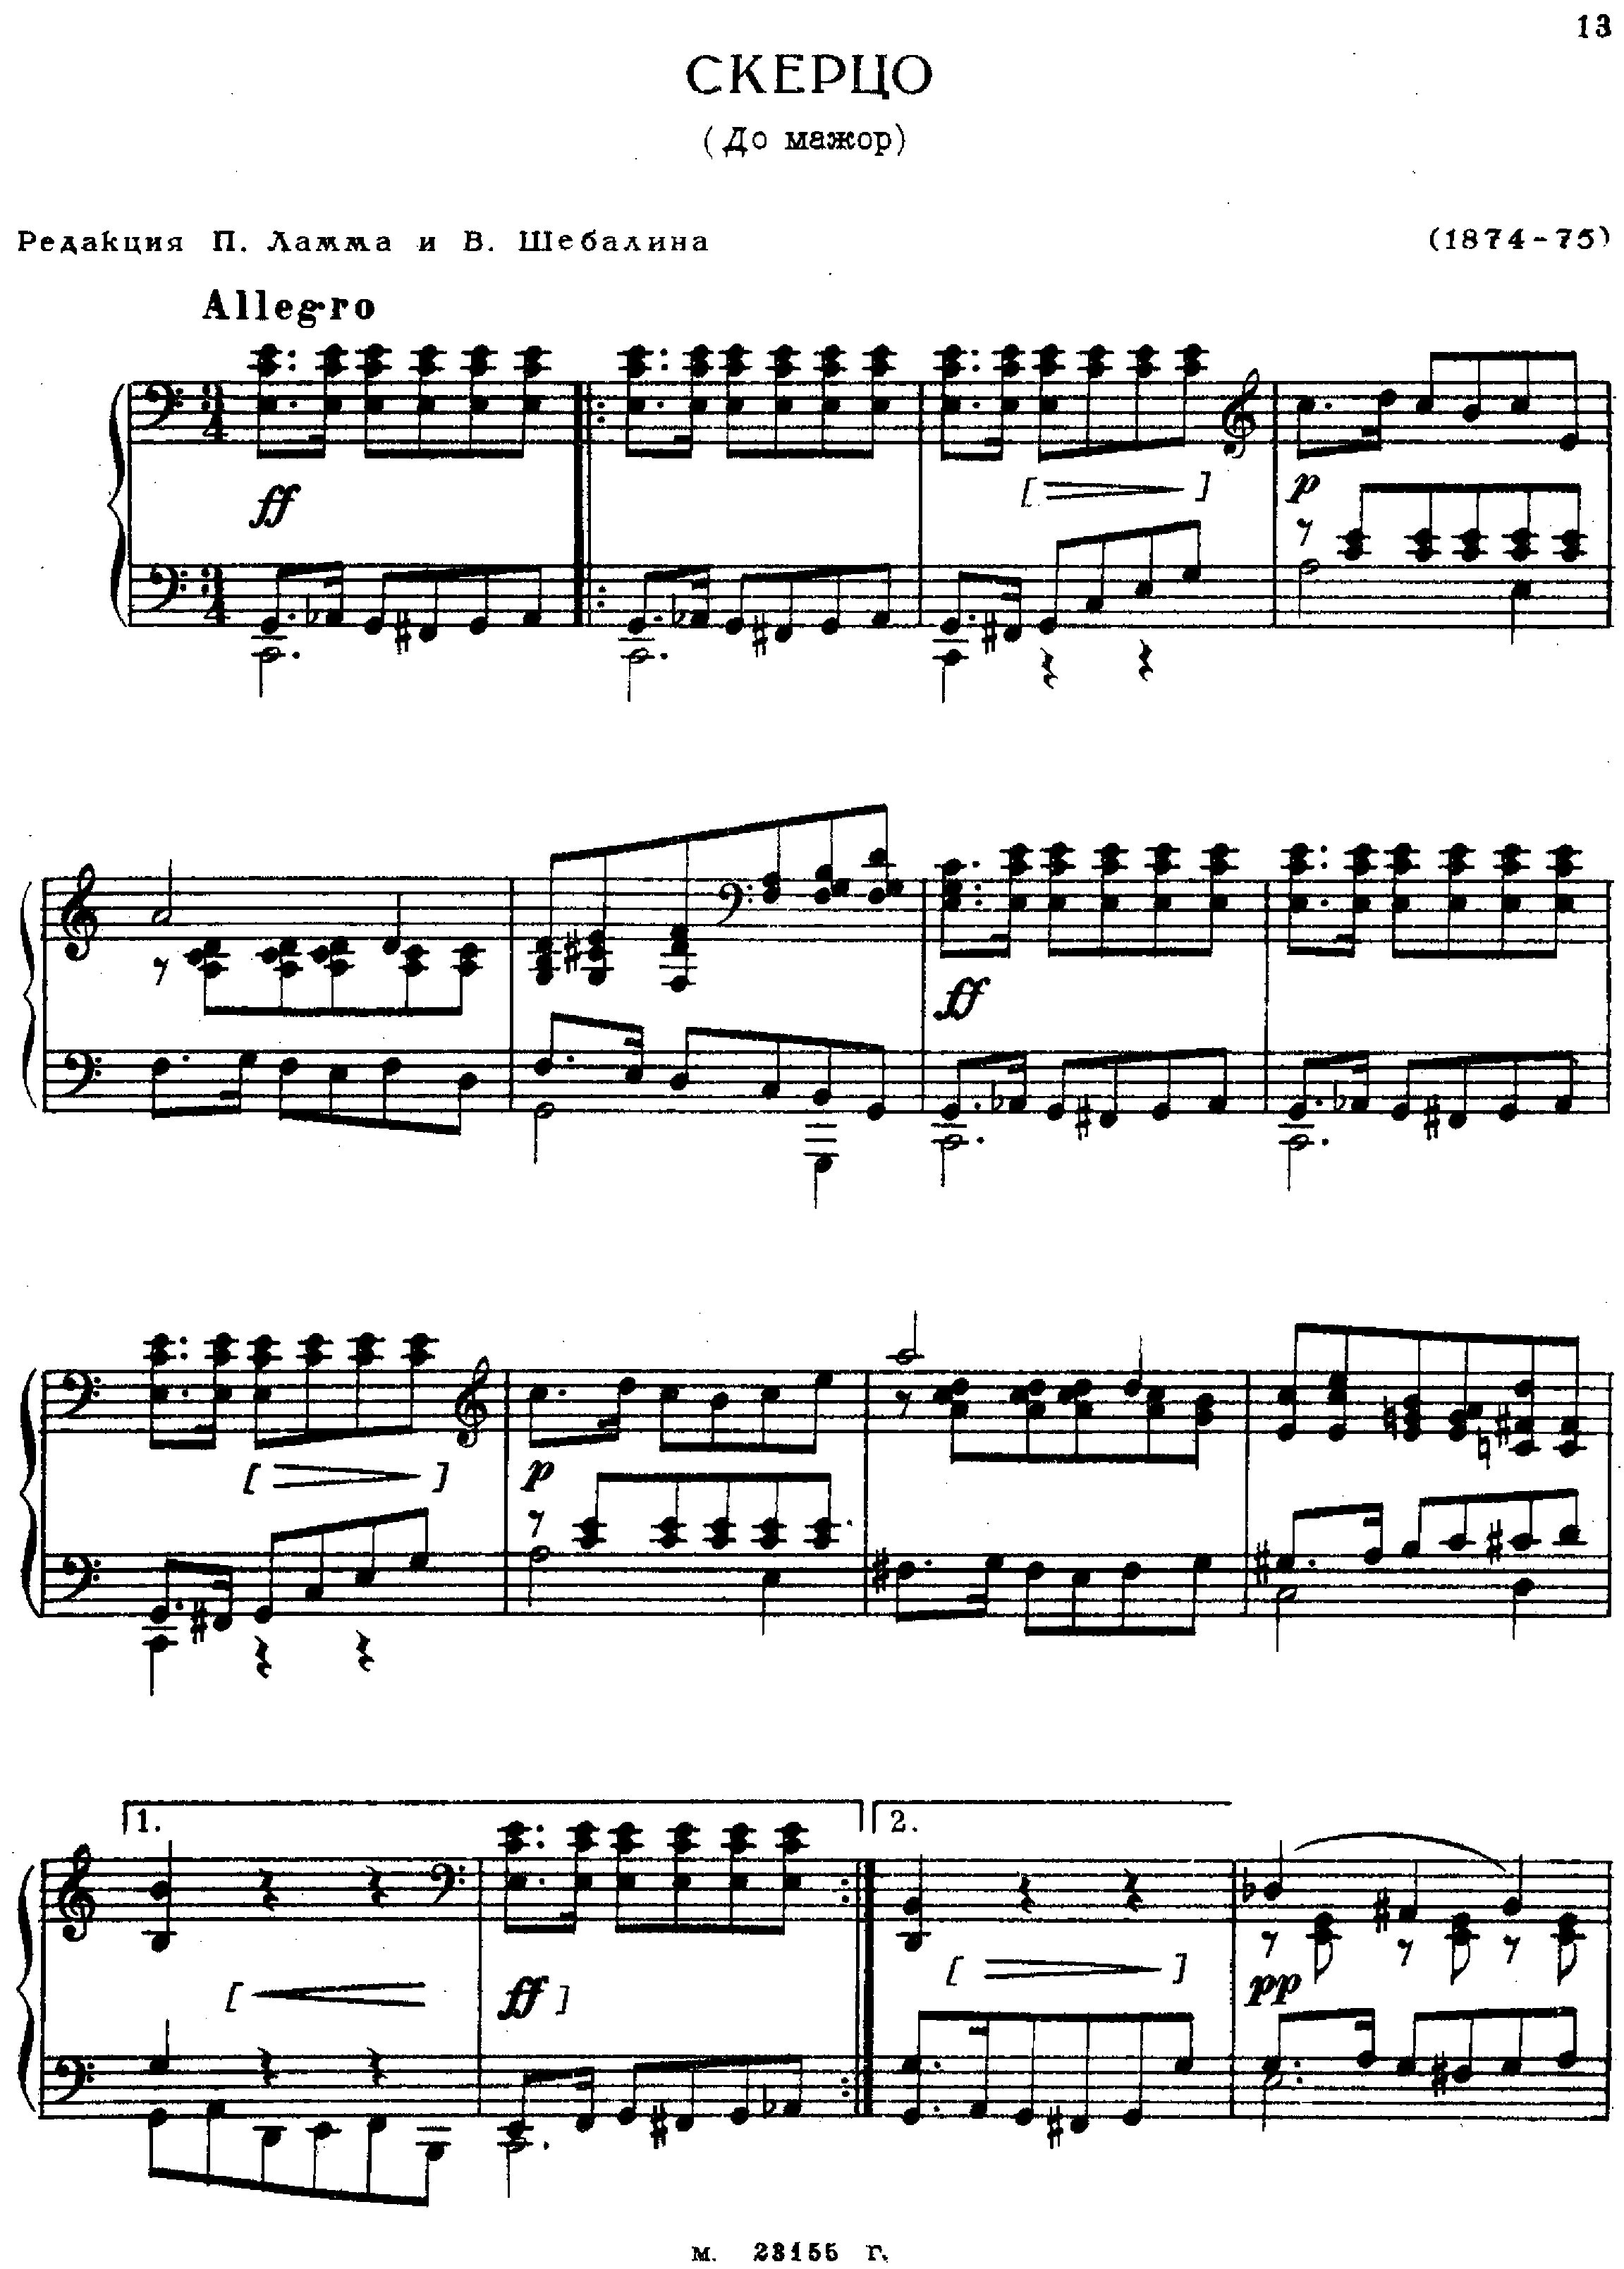 No.2 in C Major琴譜